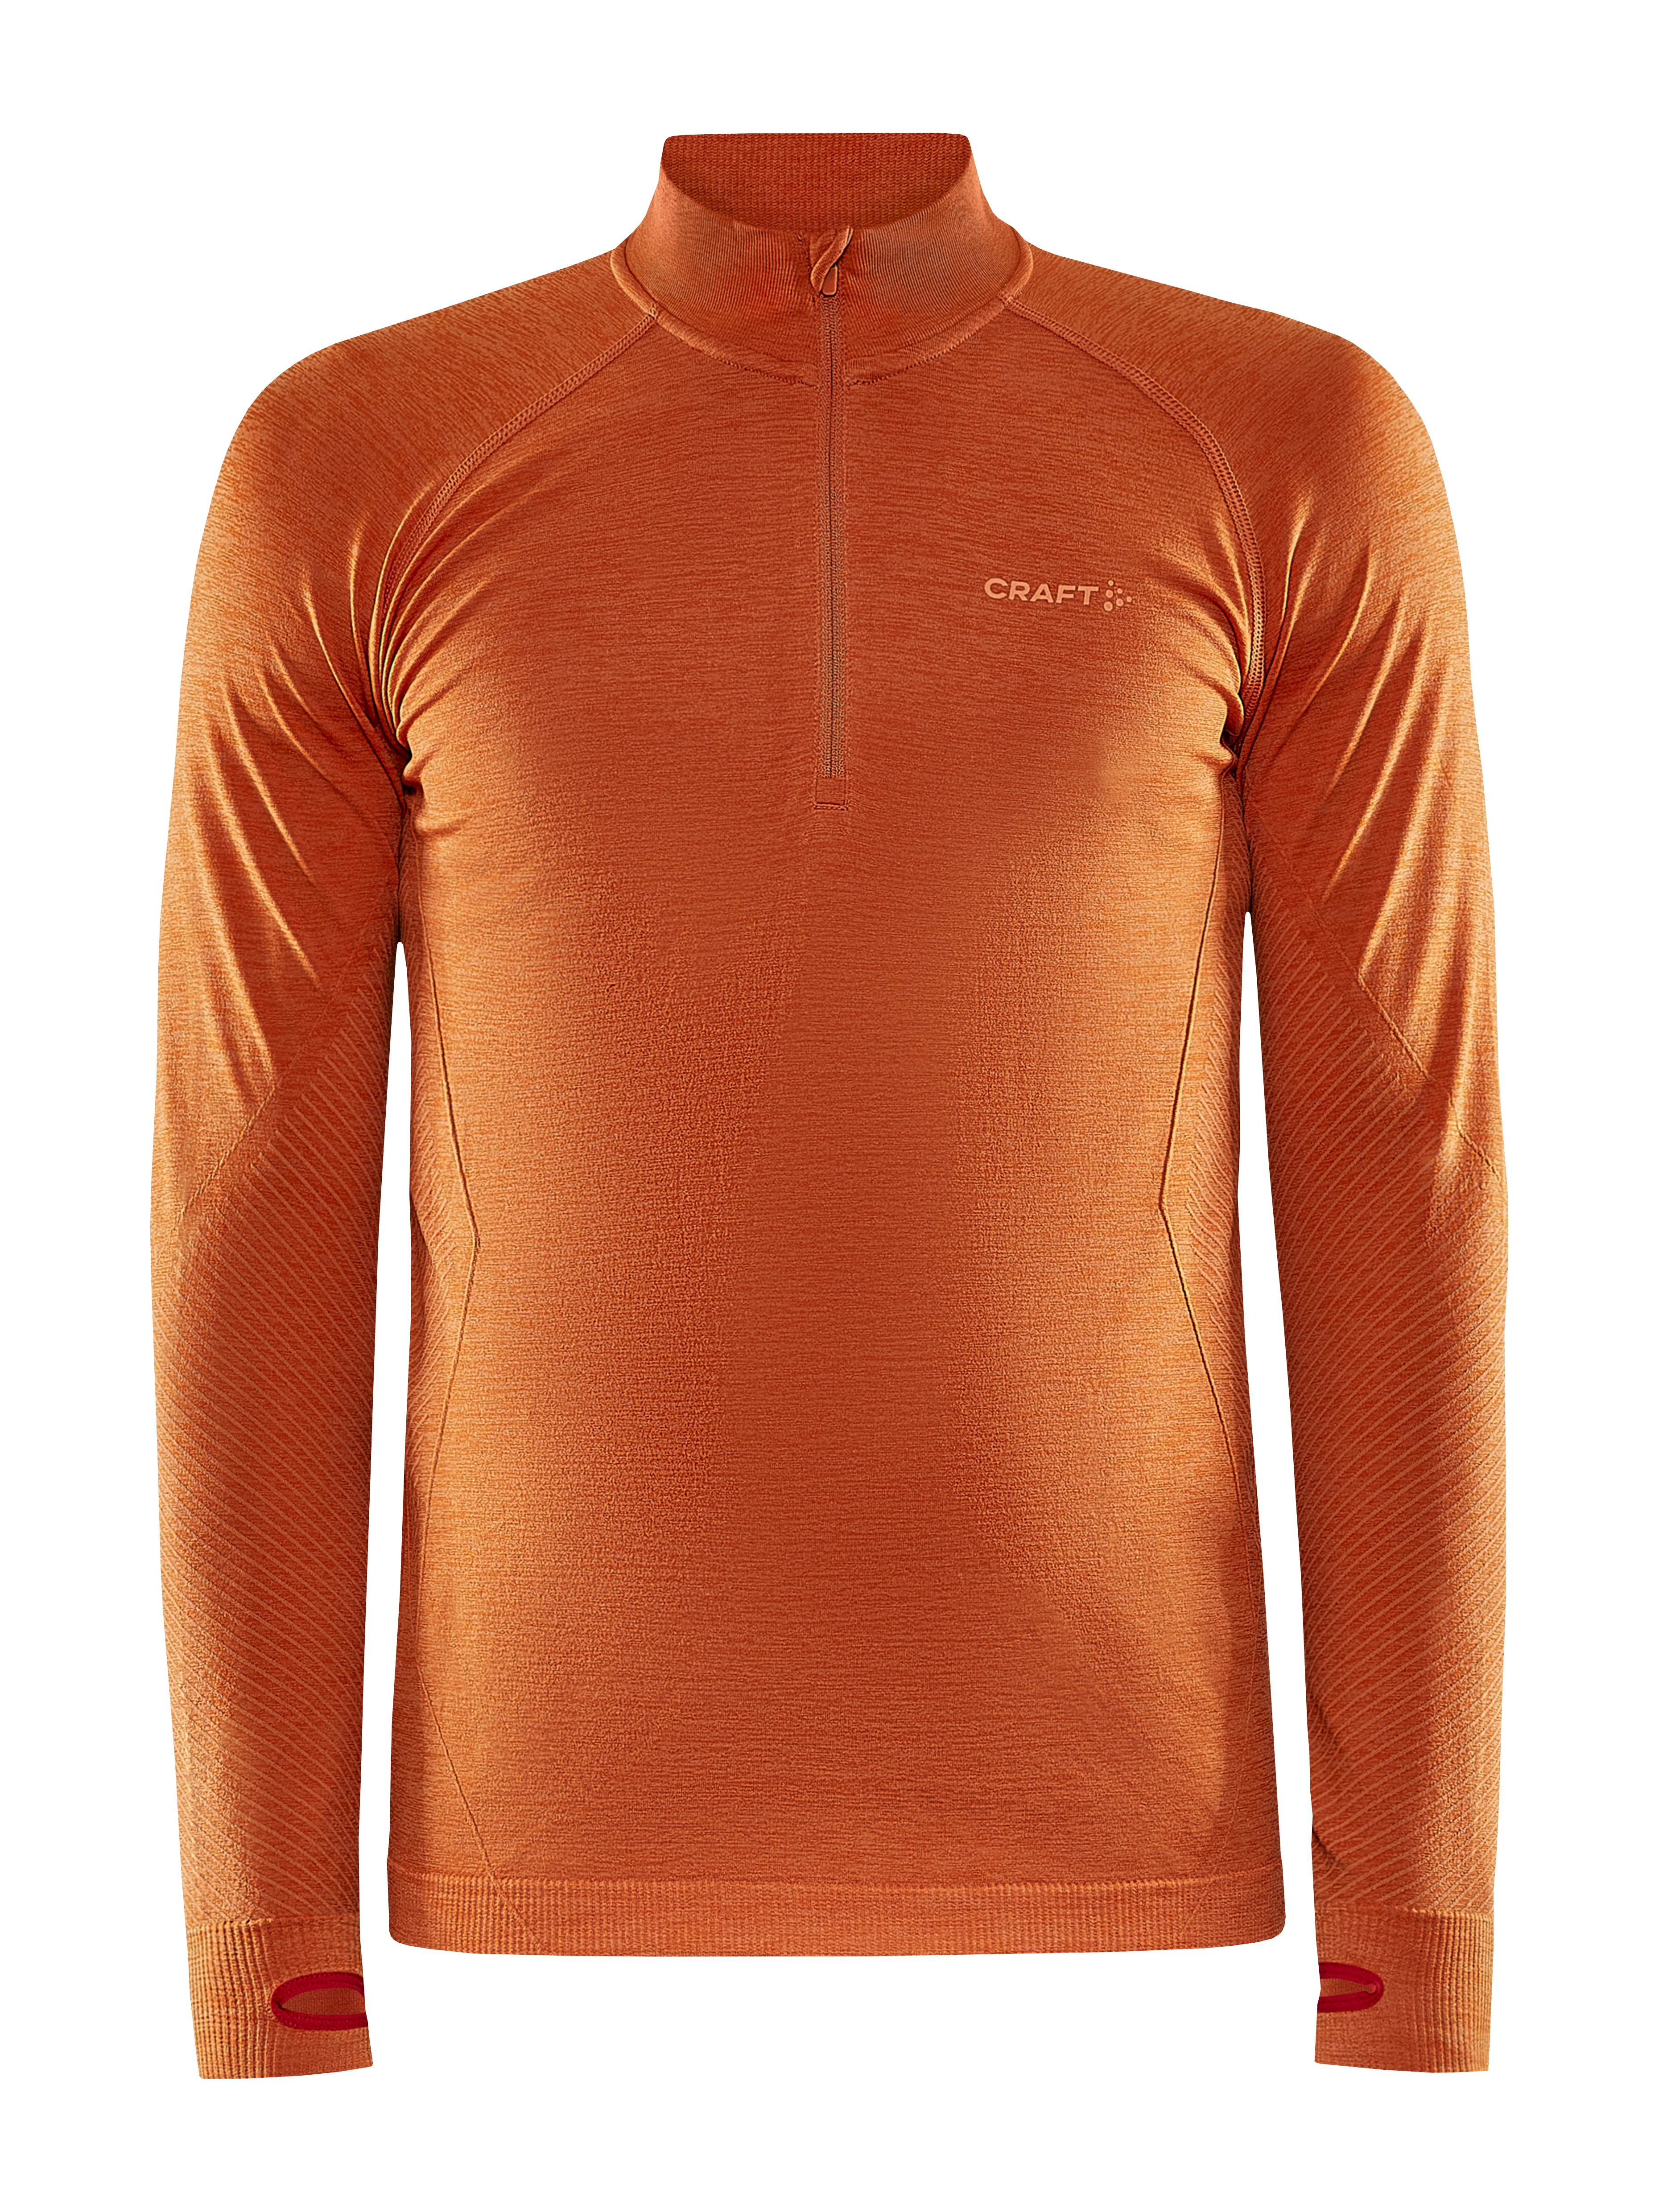 HZ Orange CORE Active | Craft M - Sportswear Dry Comfort